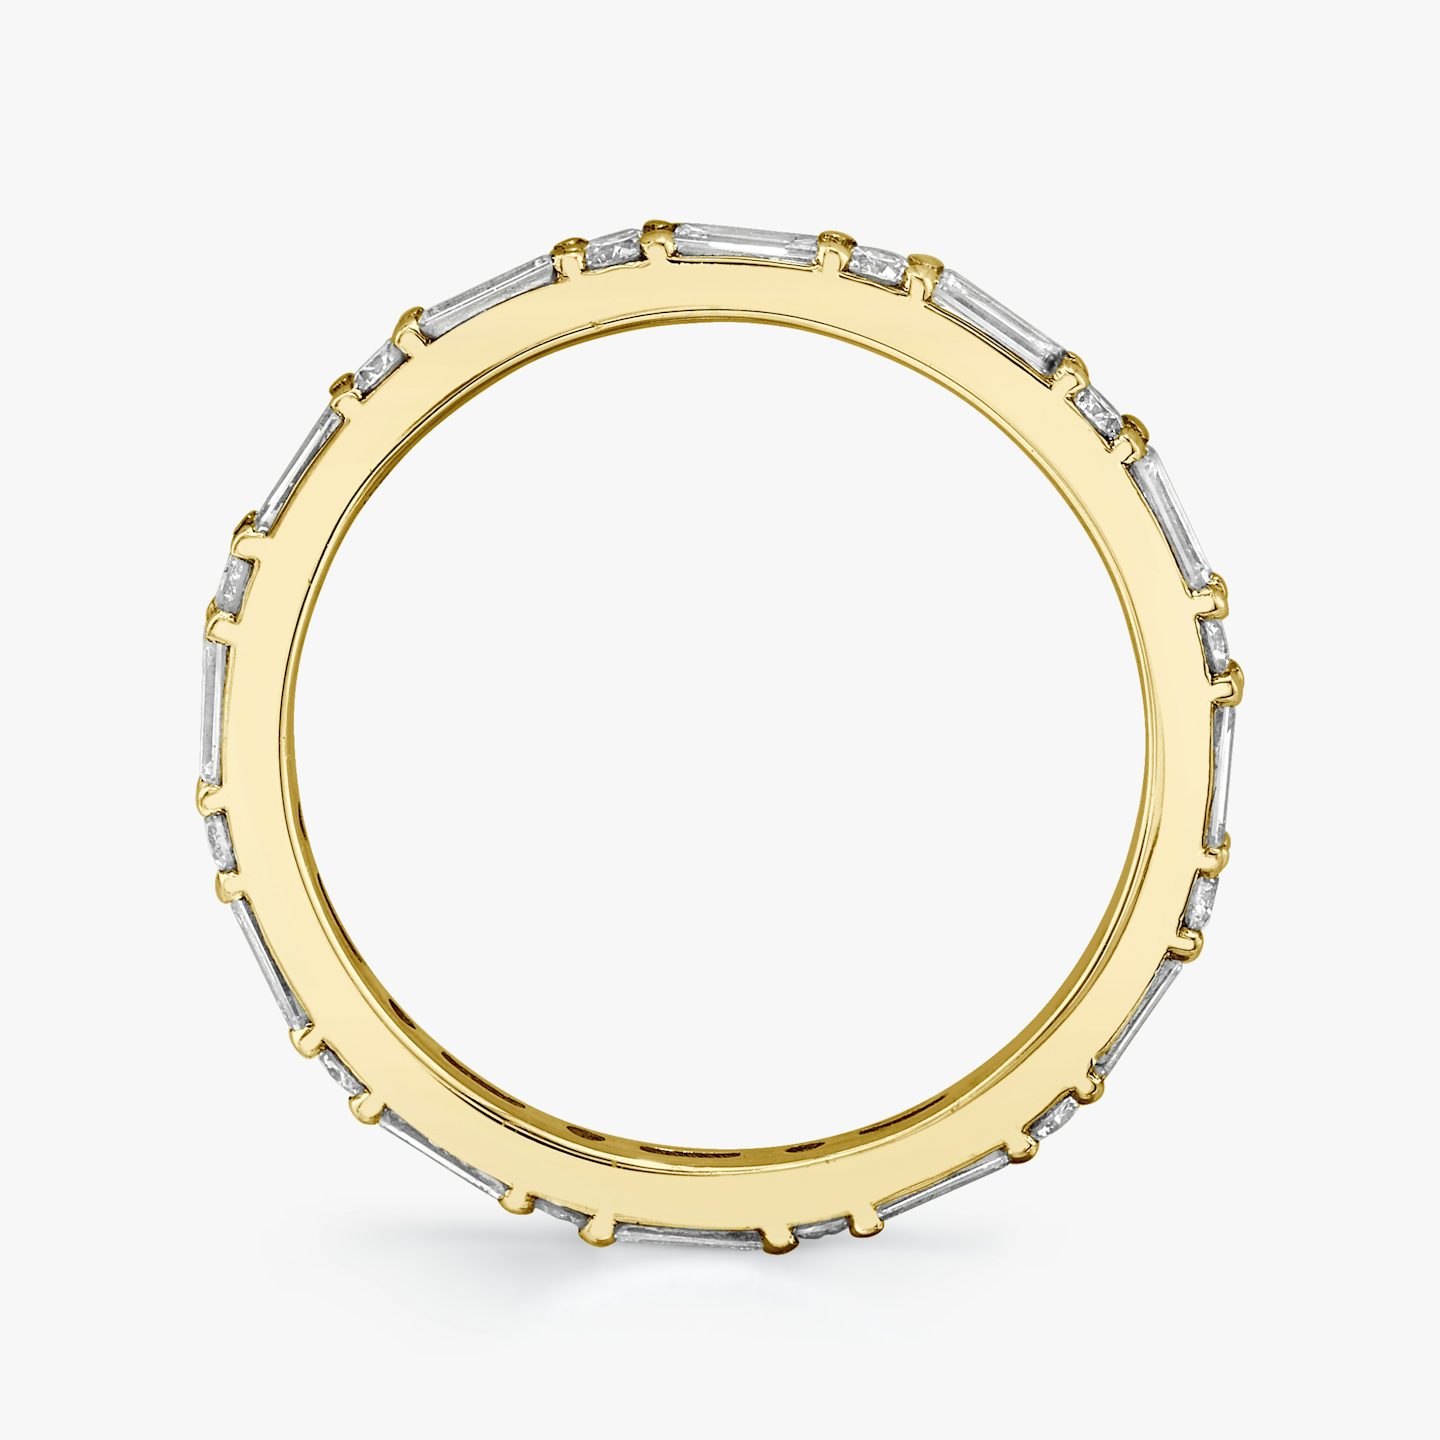 Alternating Shapes Ring | Rund | 18k | 18k Gelbgold | Ringstil: Komplett besetzt